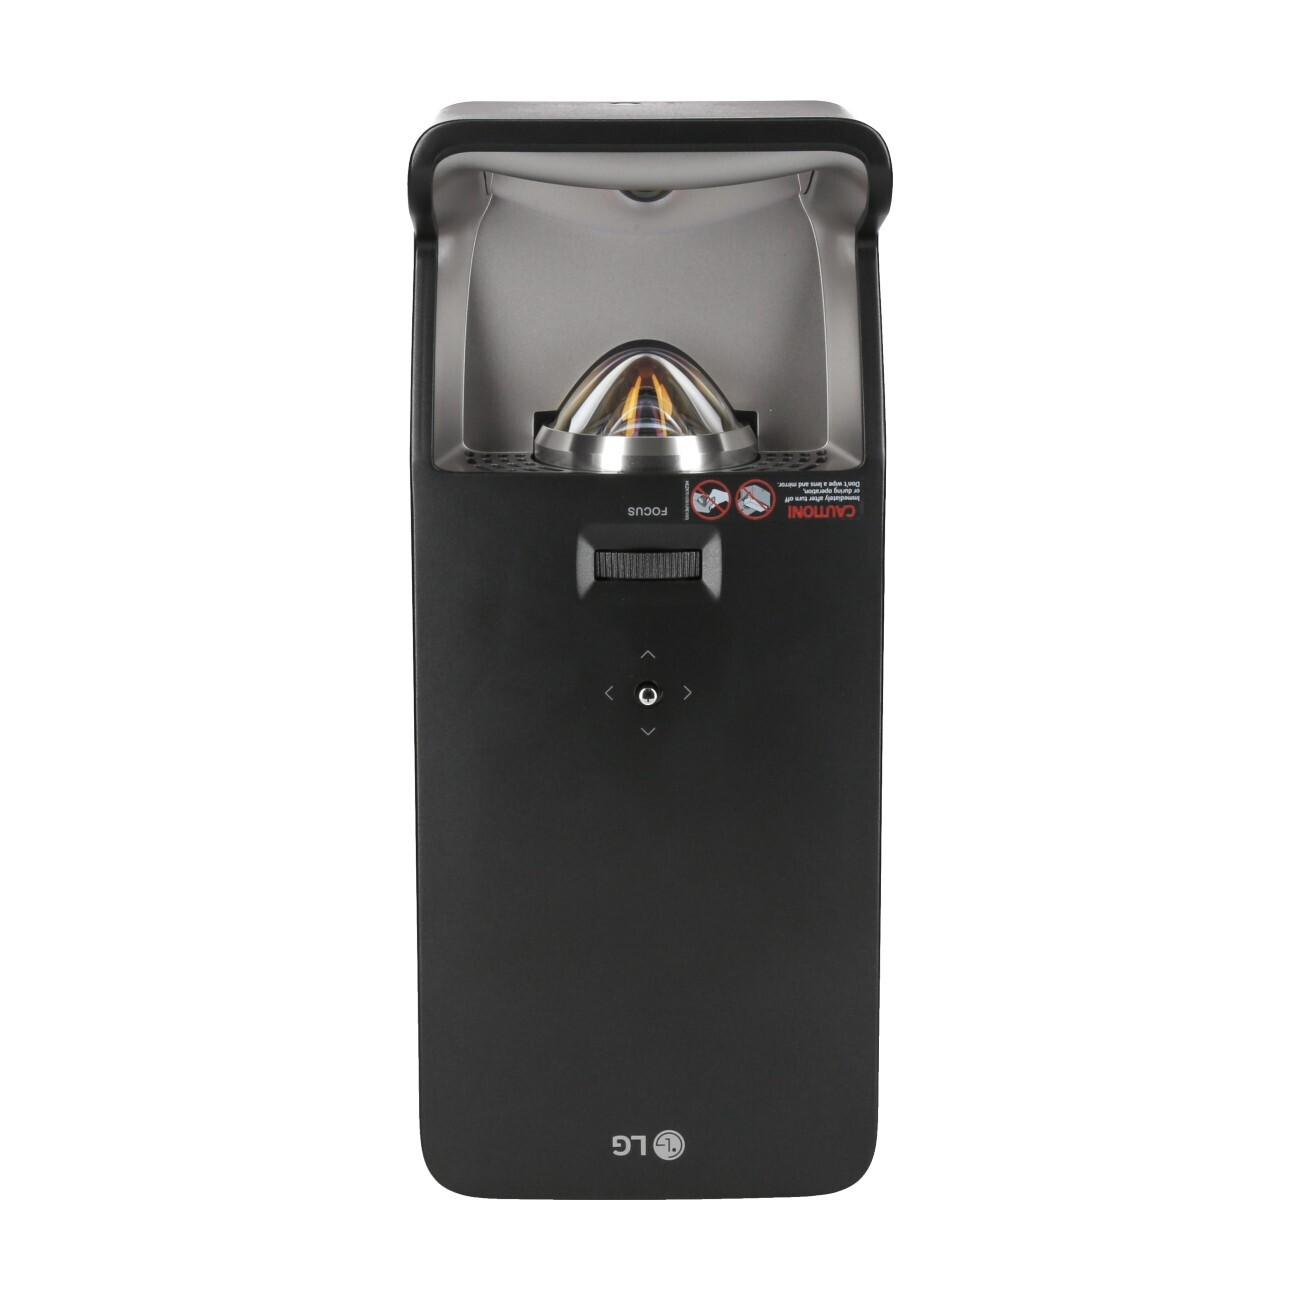 LG PF1000U: Ultrakurzdistanz-LED-Projektor mit FullHD-Auflösung und  Bluetooth-Konnektivität